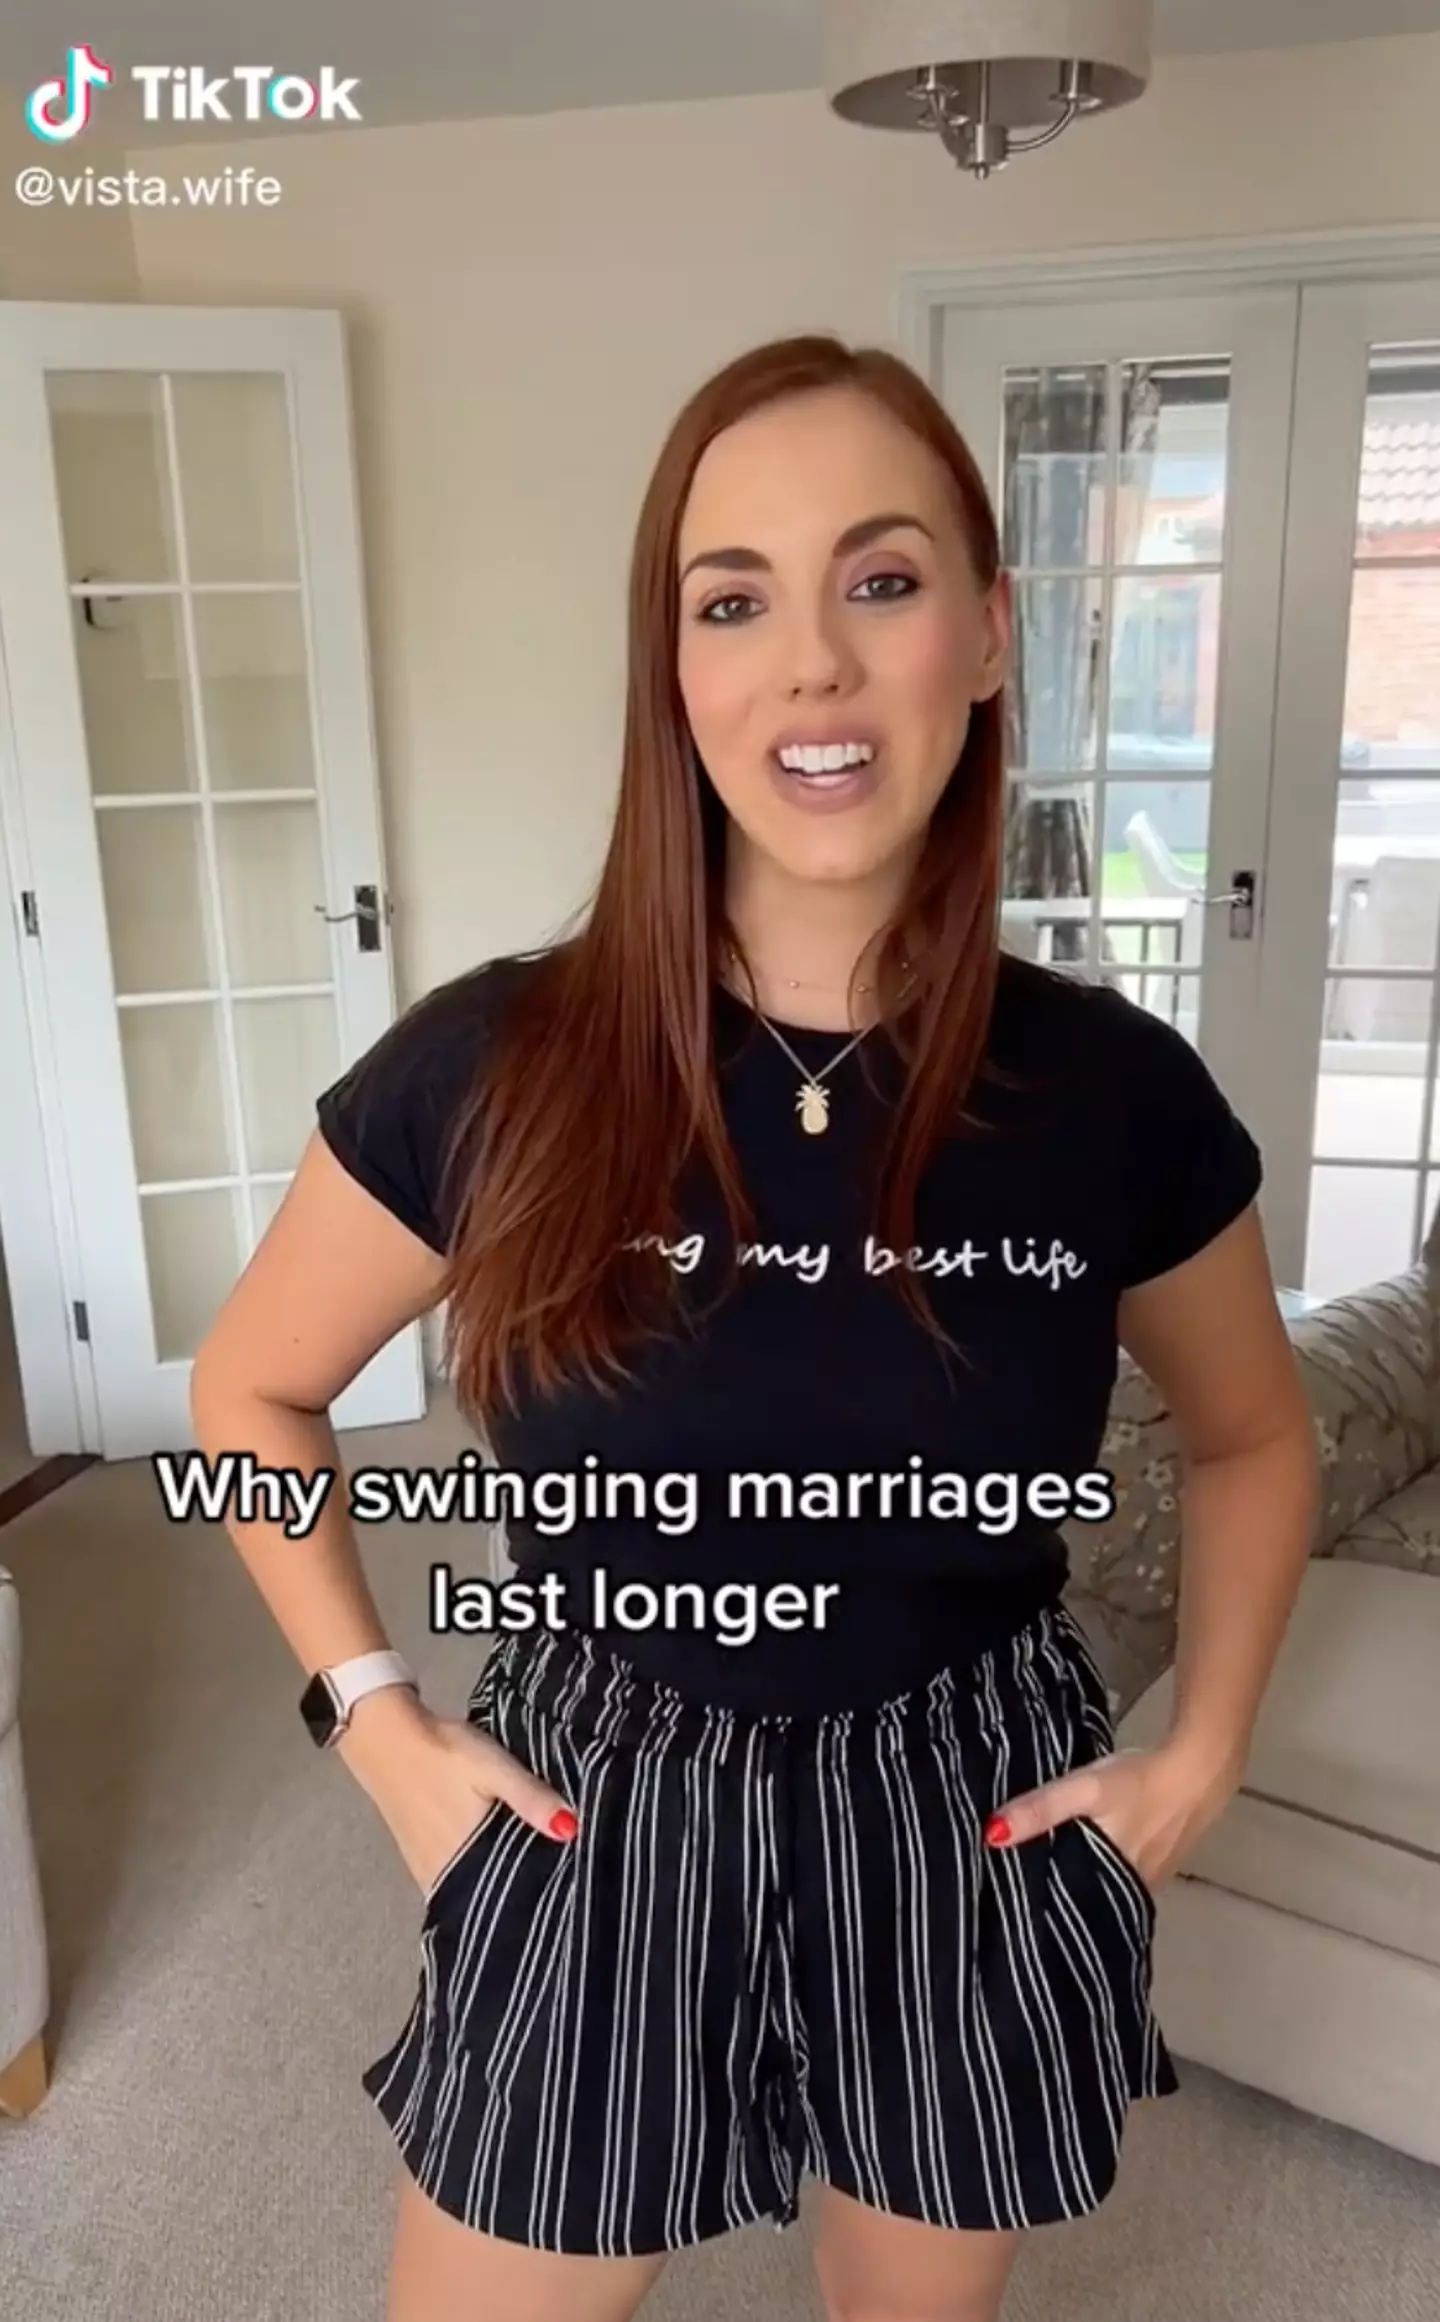 Vista Wife believes swinging marriages can last longer.